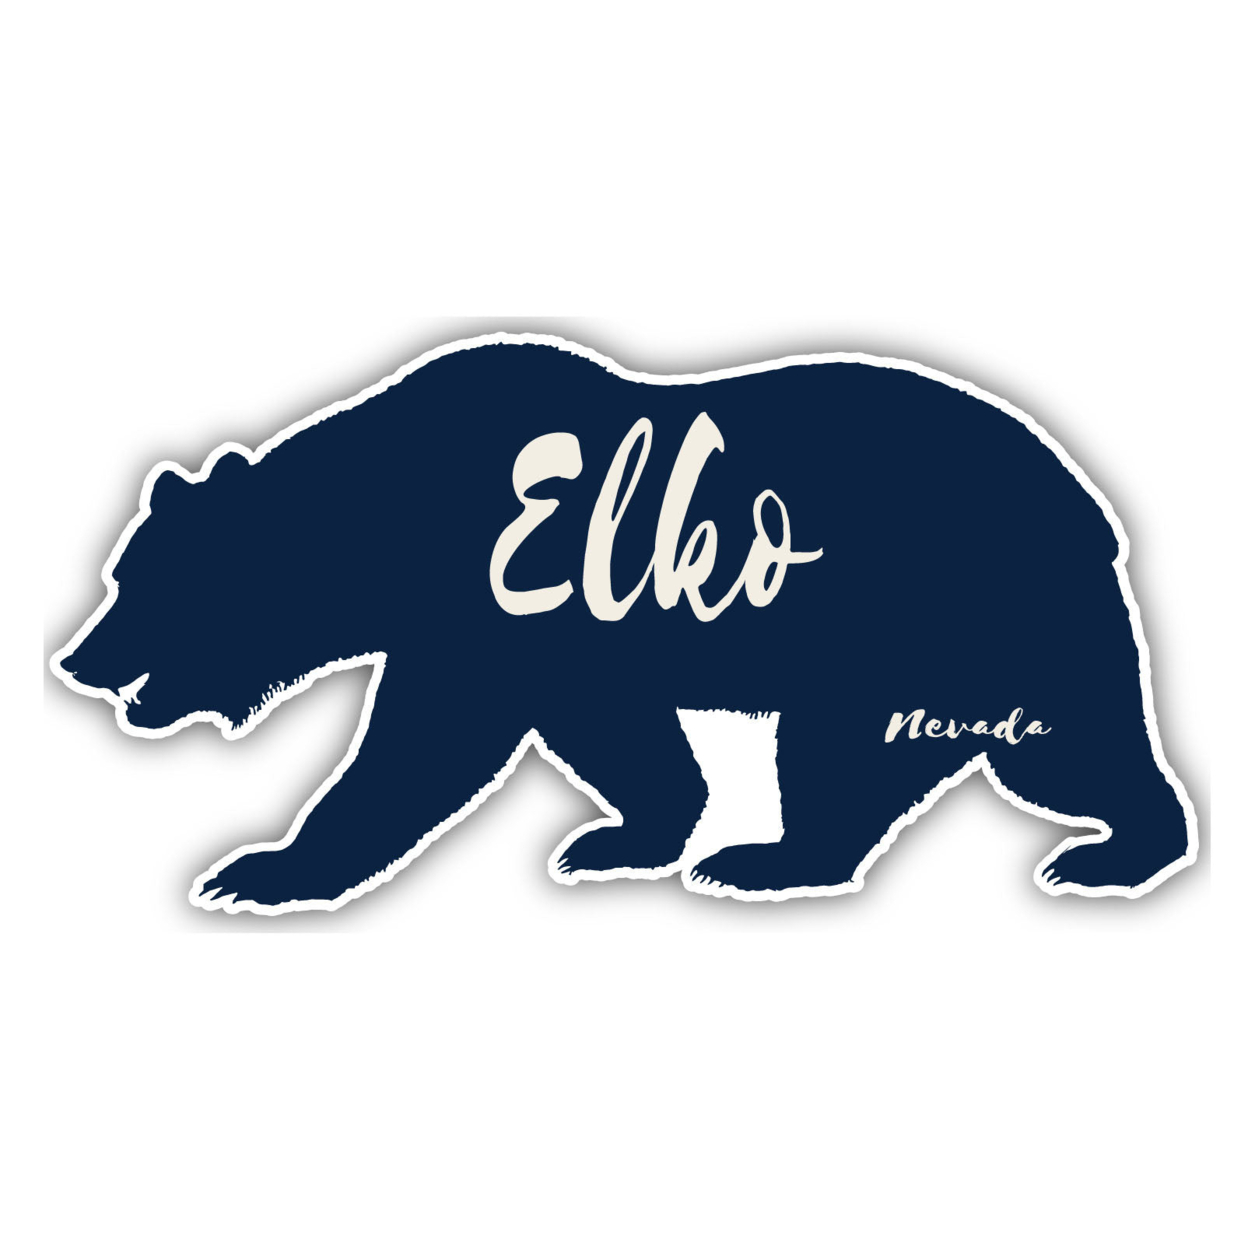 Elko Nevada Souvenir Decorative Stickers (Choose Theme And Size) - Single Unit, 2-Inch, Bear